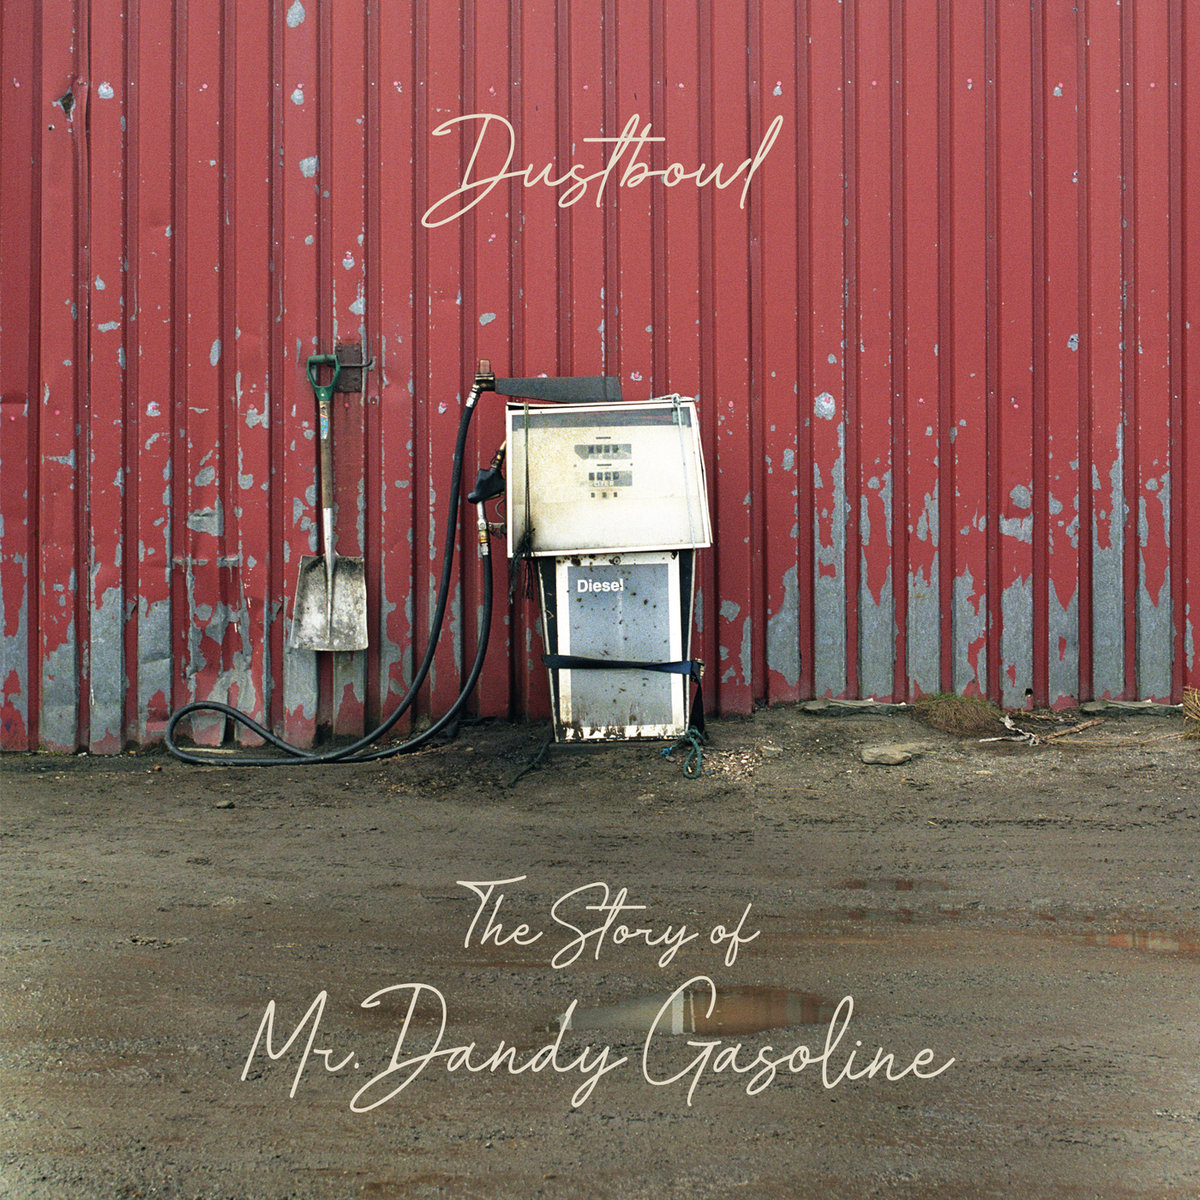 Mr Dandy Gasoline Dustbowl